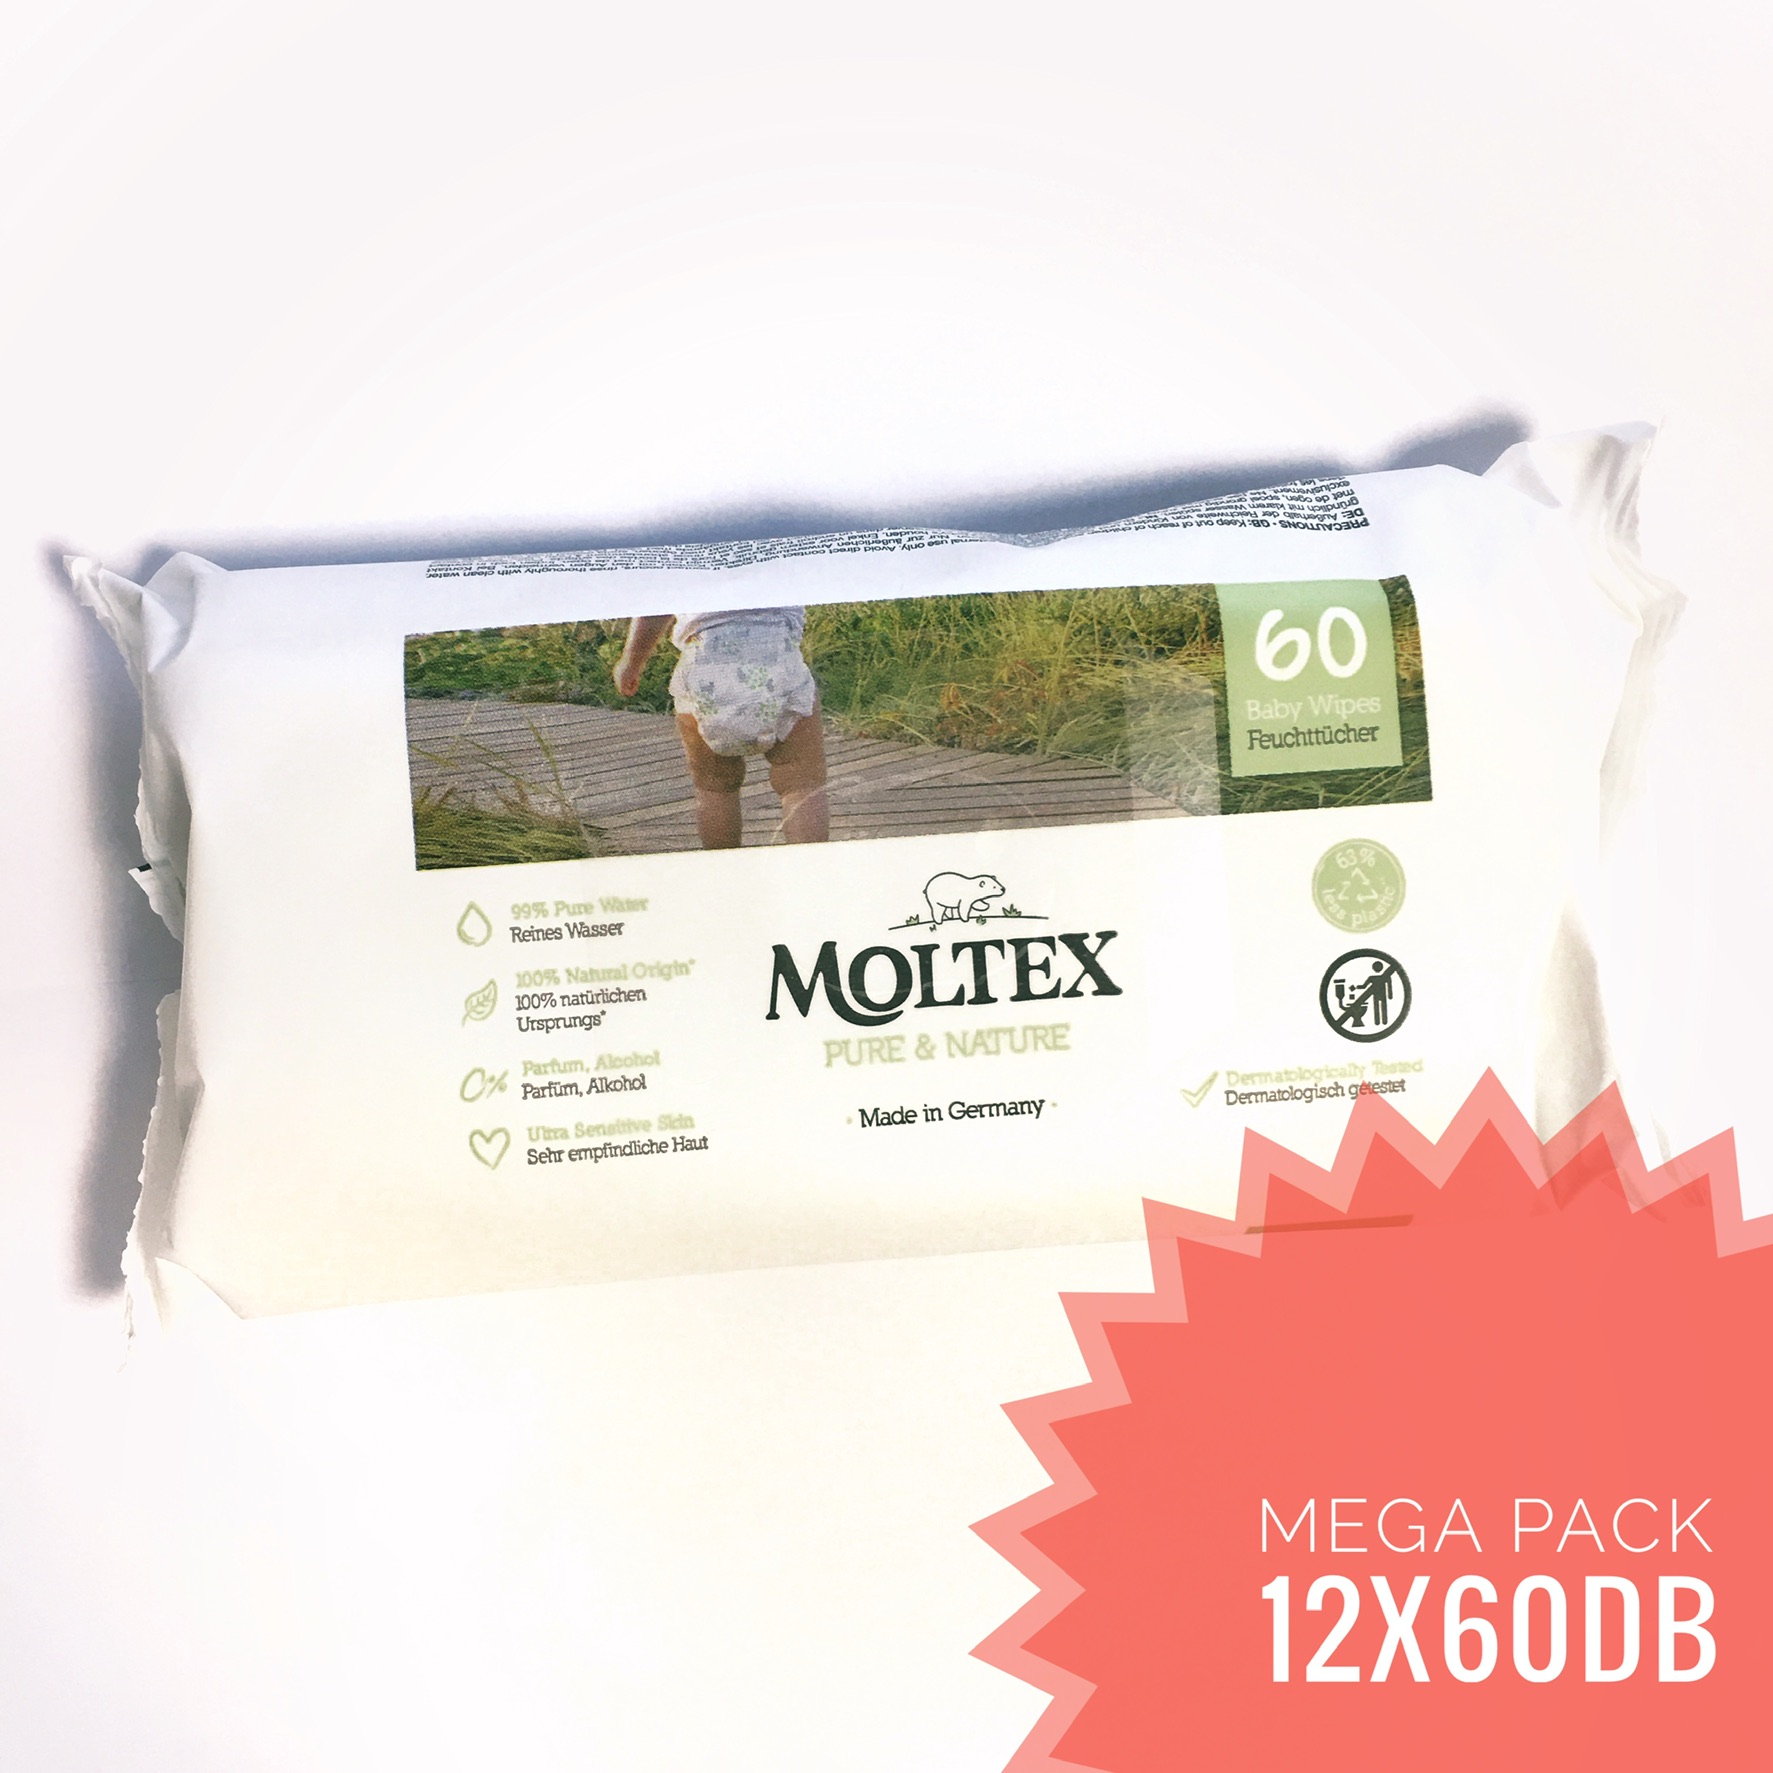 MOLTEX Pure&Nature biológiailag lebomló nedves törlőkendő MEGA PACK, 12x60db